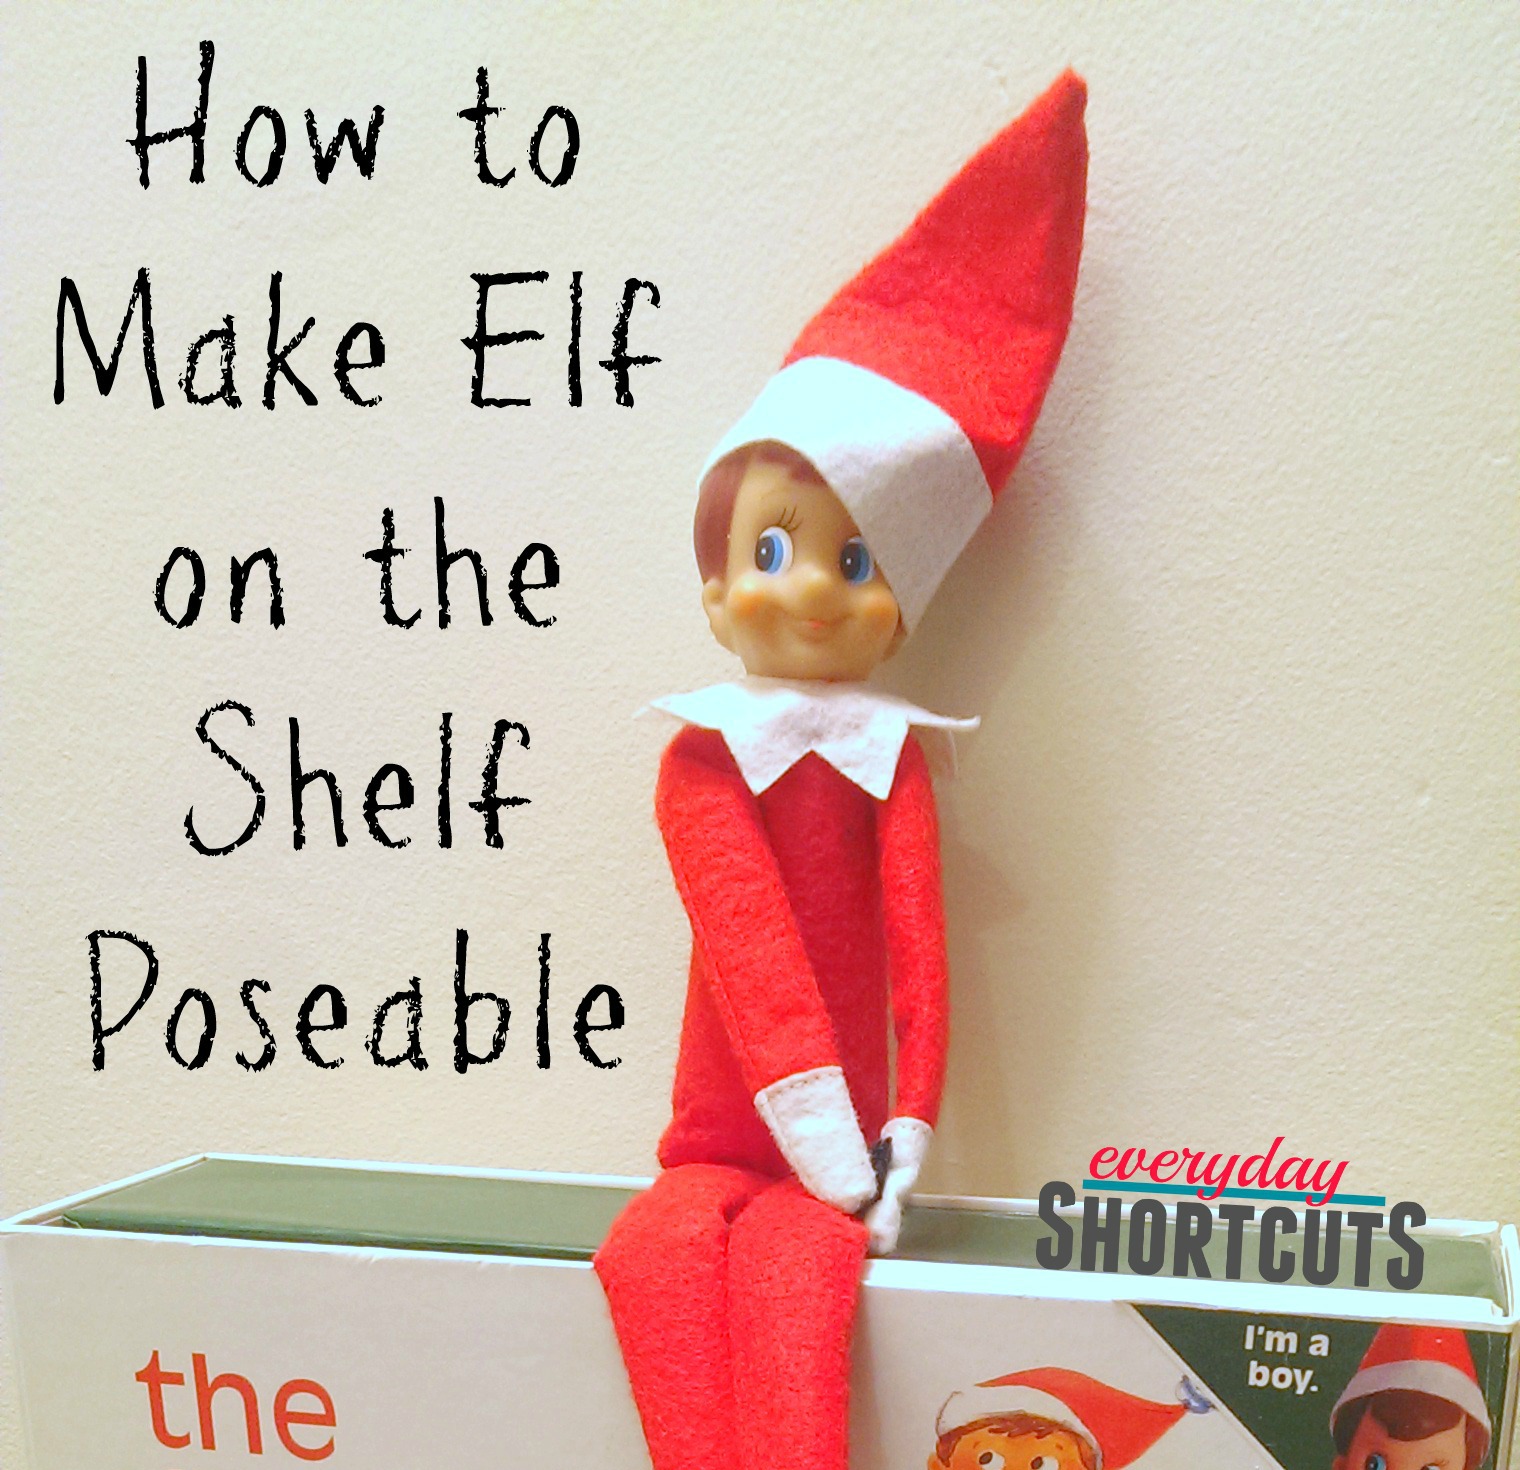 15 MORE Fun Elf on the Shelf Ideas - Poofy Cheeks